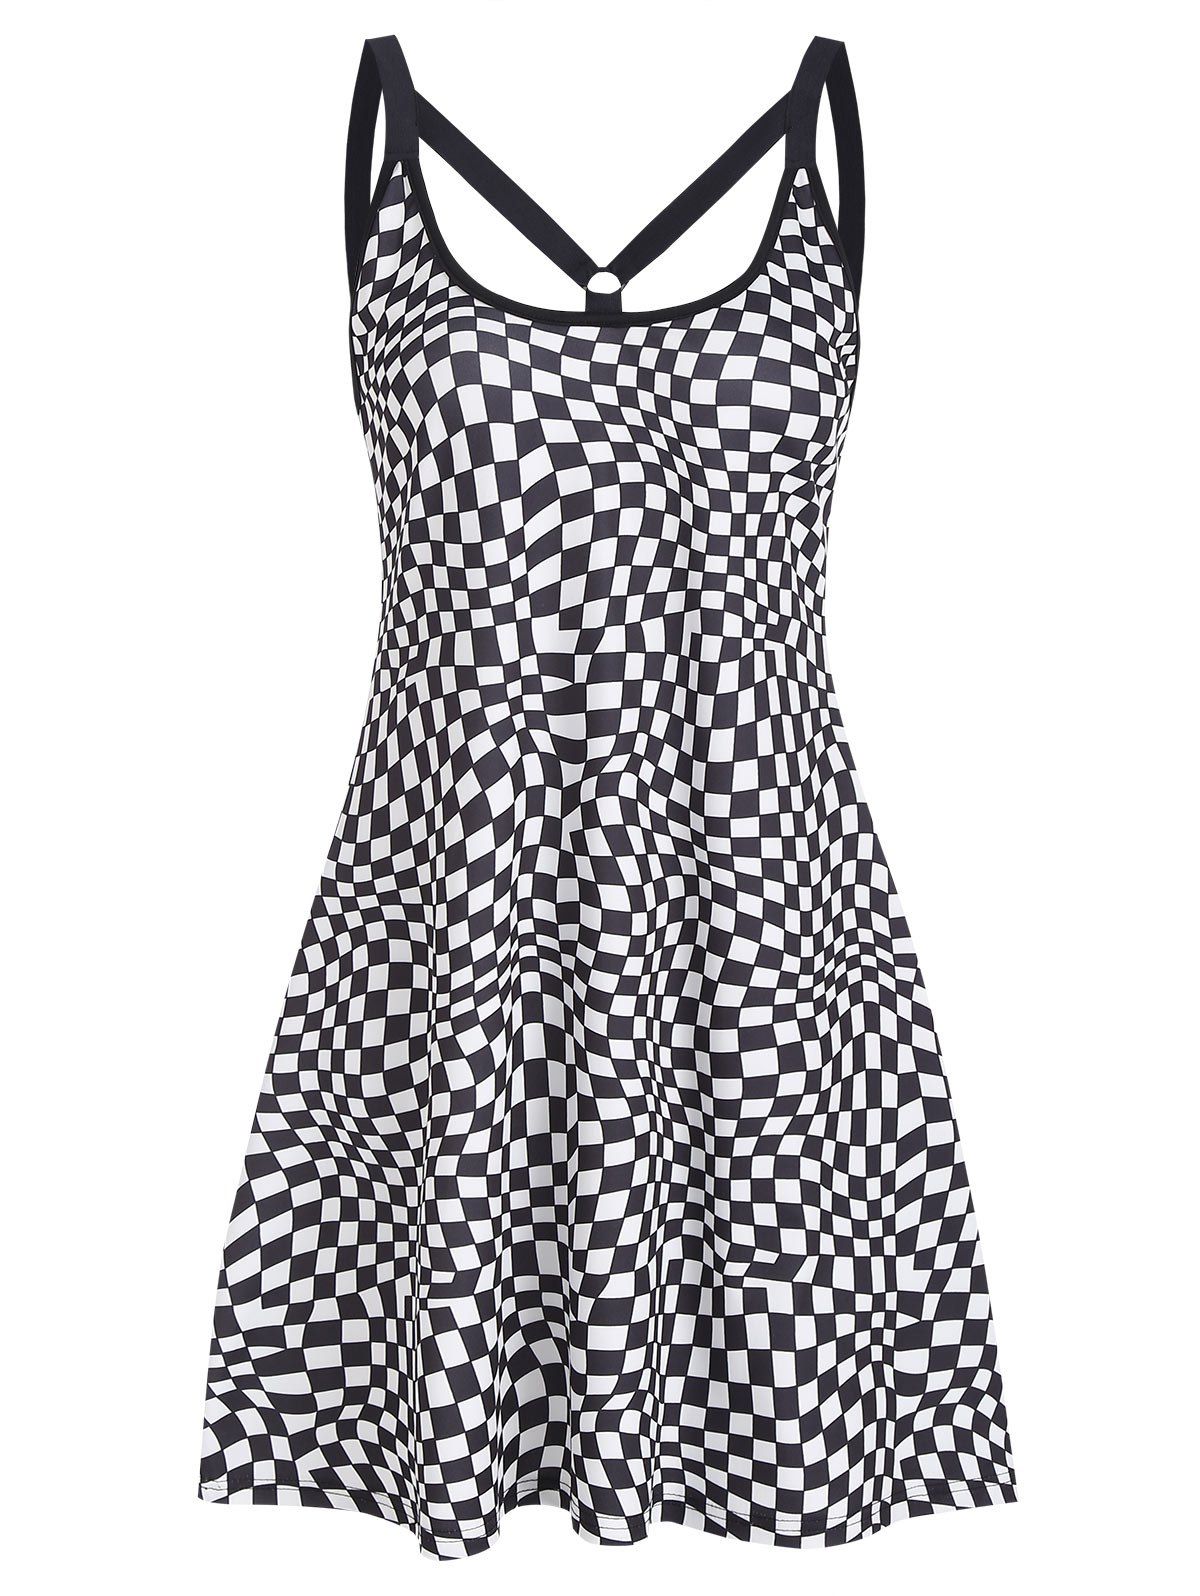 Casual Checkerboard Plaid Print O Ring Skater A Line Cami Dress - BLACK S